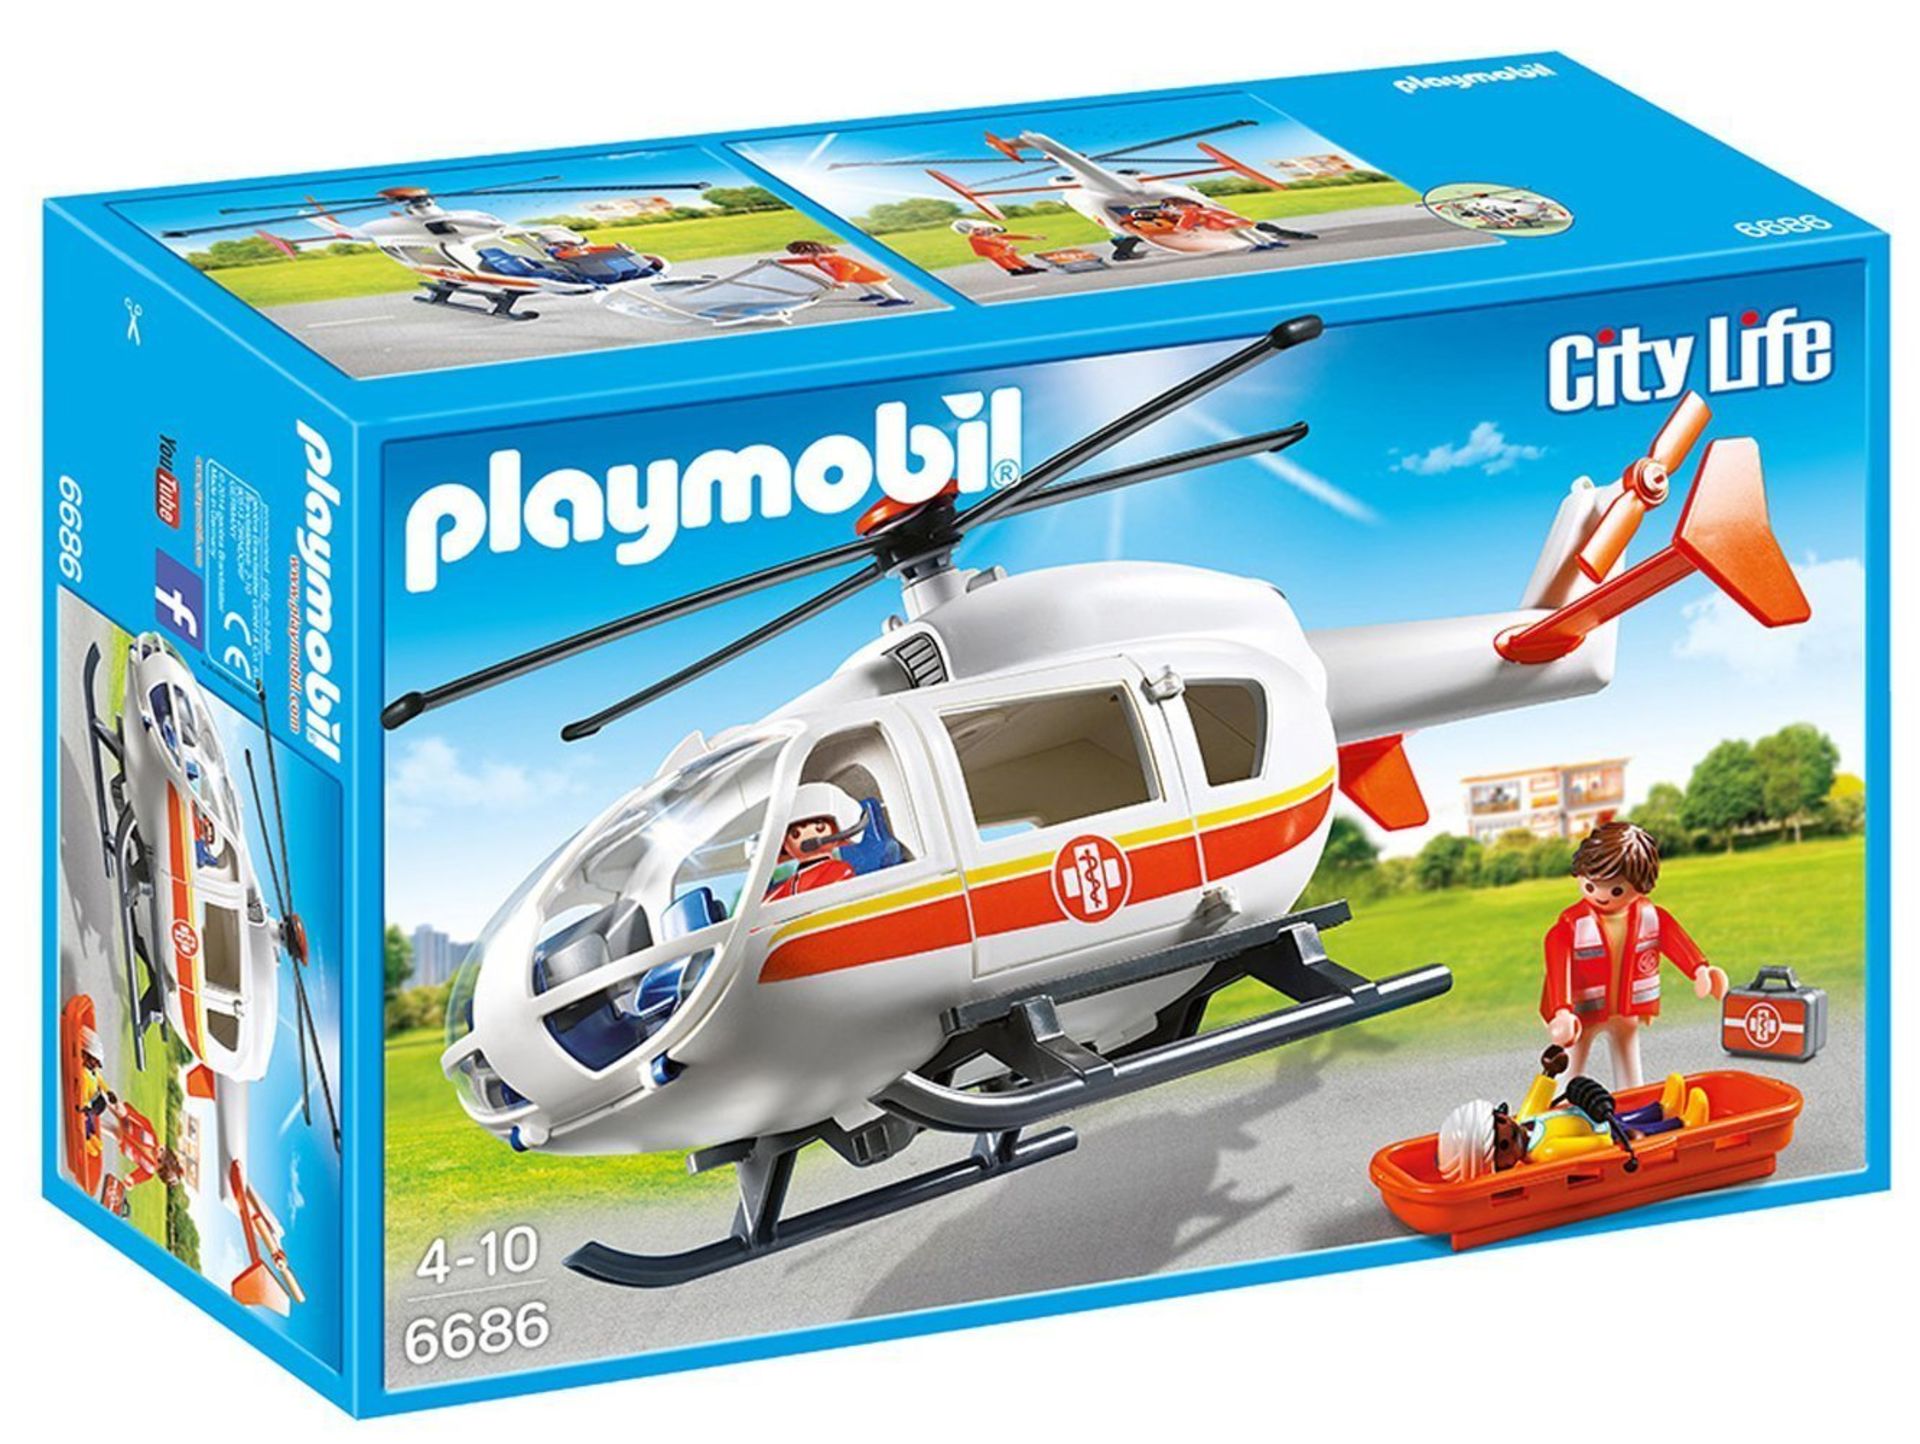 14 x Playmobil toys as described | RRP £732.36 - Bild 3 aus 4